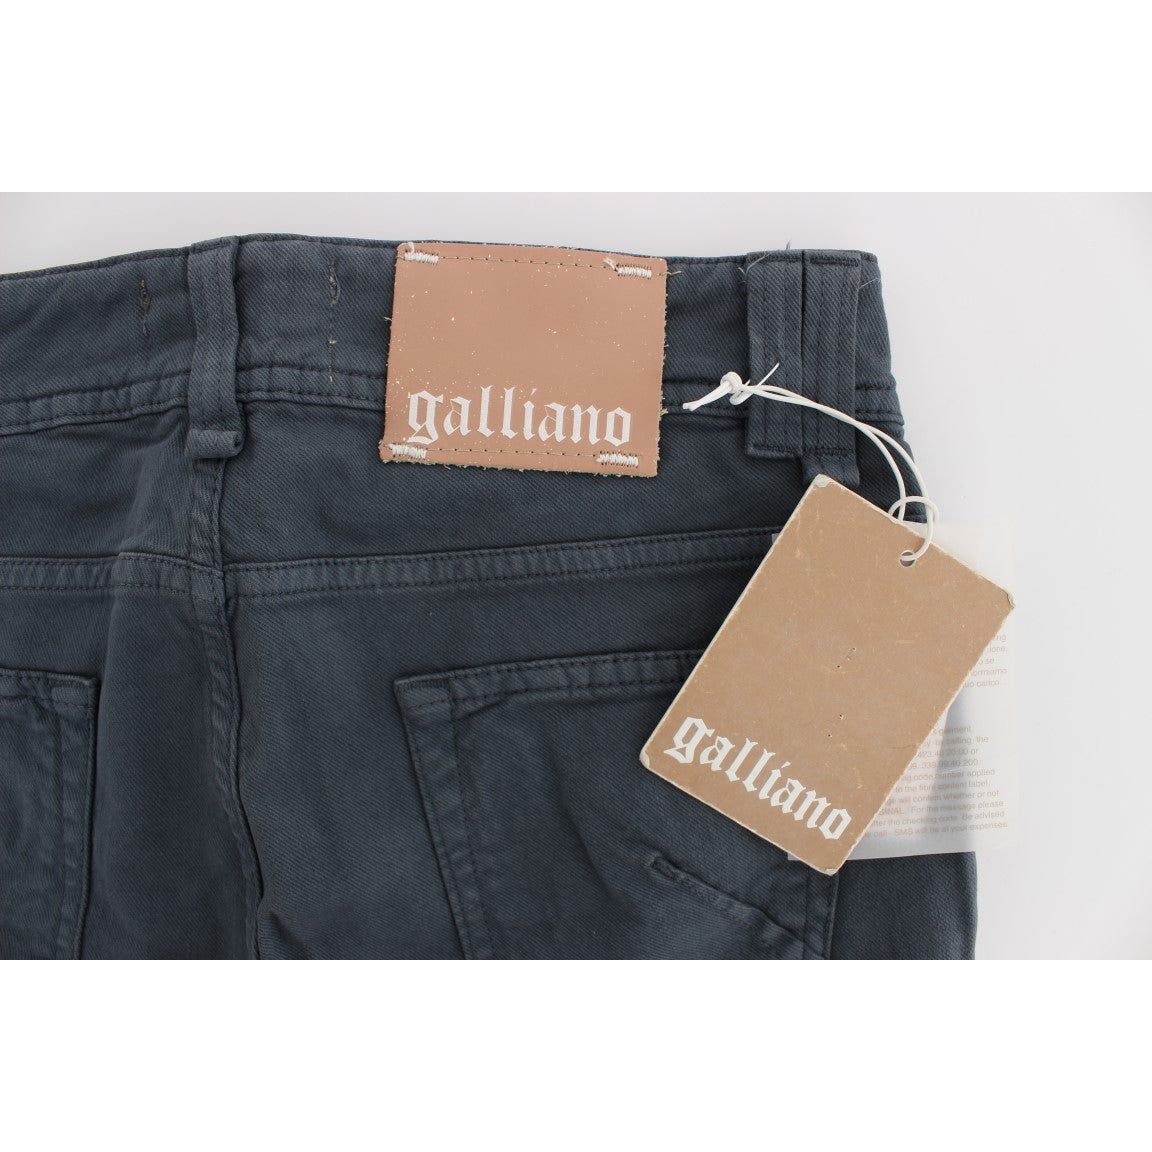 John Galliano Elegant Slim Fit Bootcut Jeans Jeans & Pants blue-cotton-blend-slim-fit-bootcut-jeans-2 330188-blue-cotton-blend-slim-fit-bootcut-jeans-3-6.jpg